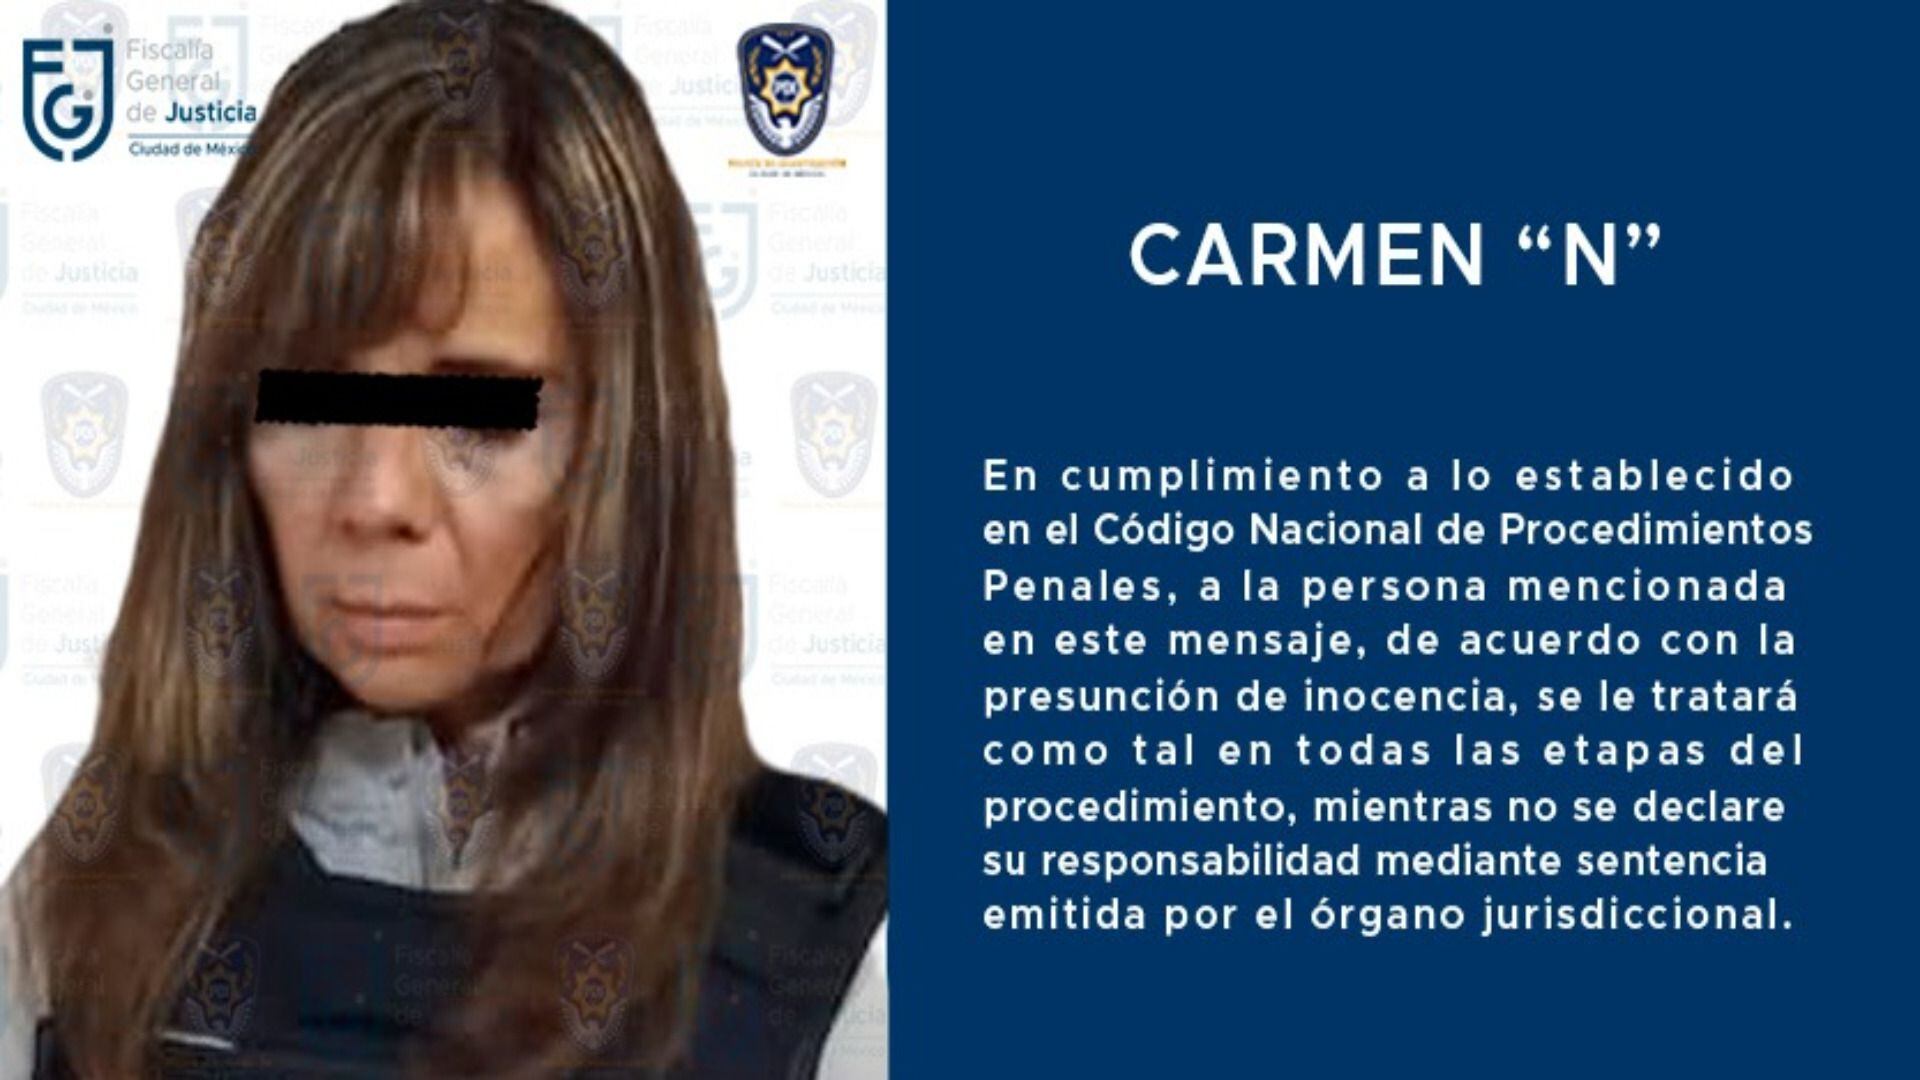 Carmen "N" madre feminicidio Montserrat Juárez